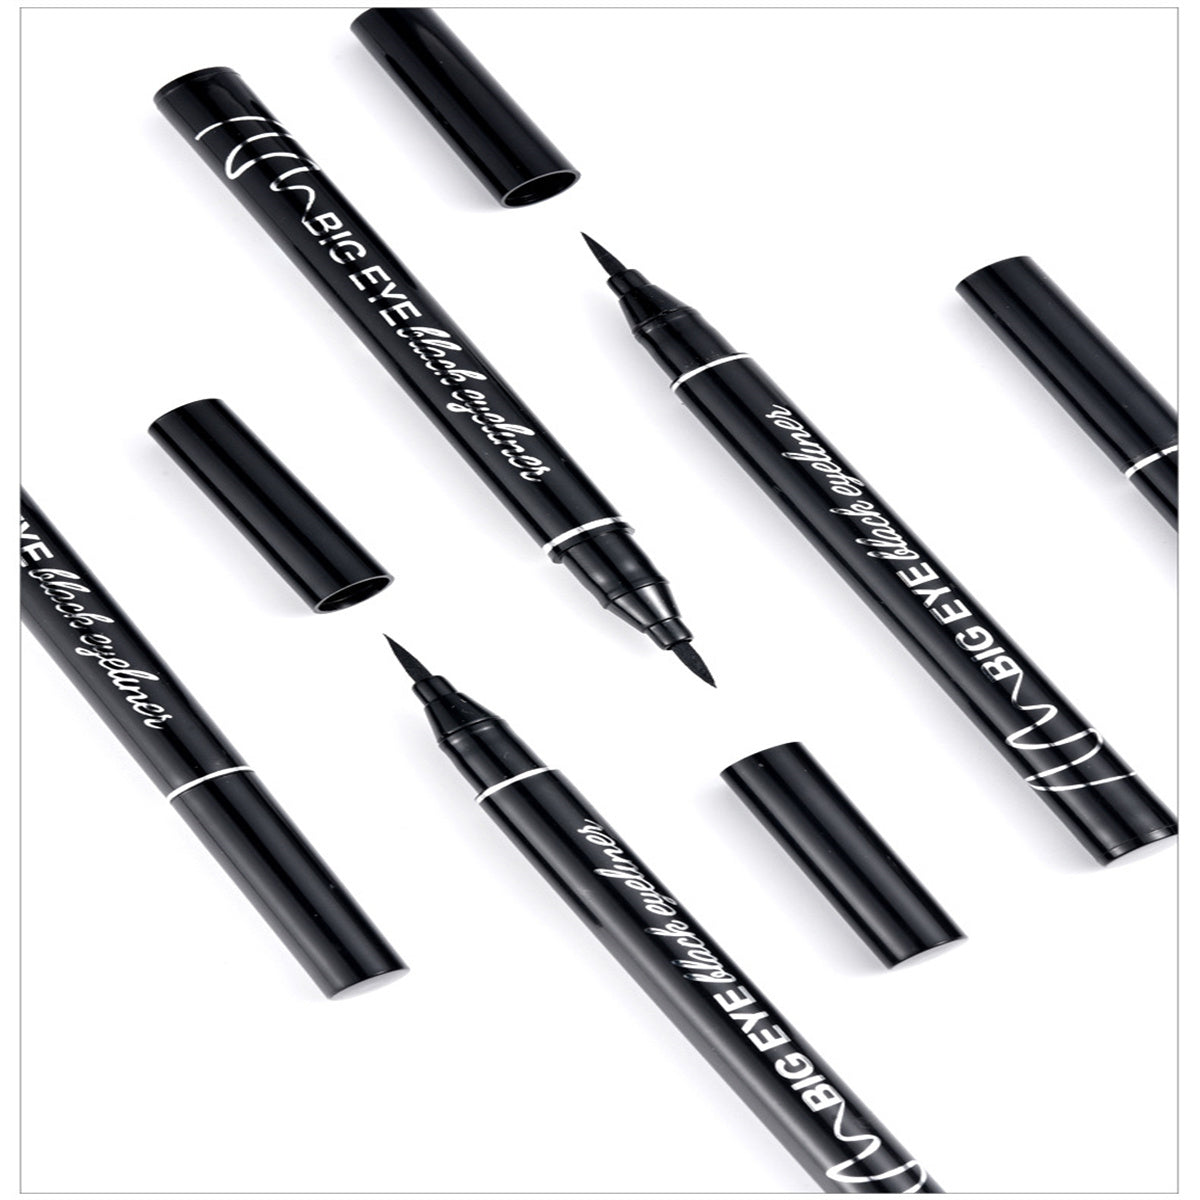 Waterproof Eyeliner Pen Long-Lasting Liquid Eyeliner Quick Drying Formula Glides on Smoothly Pack of 1